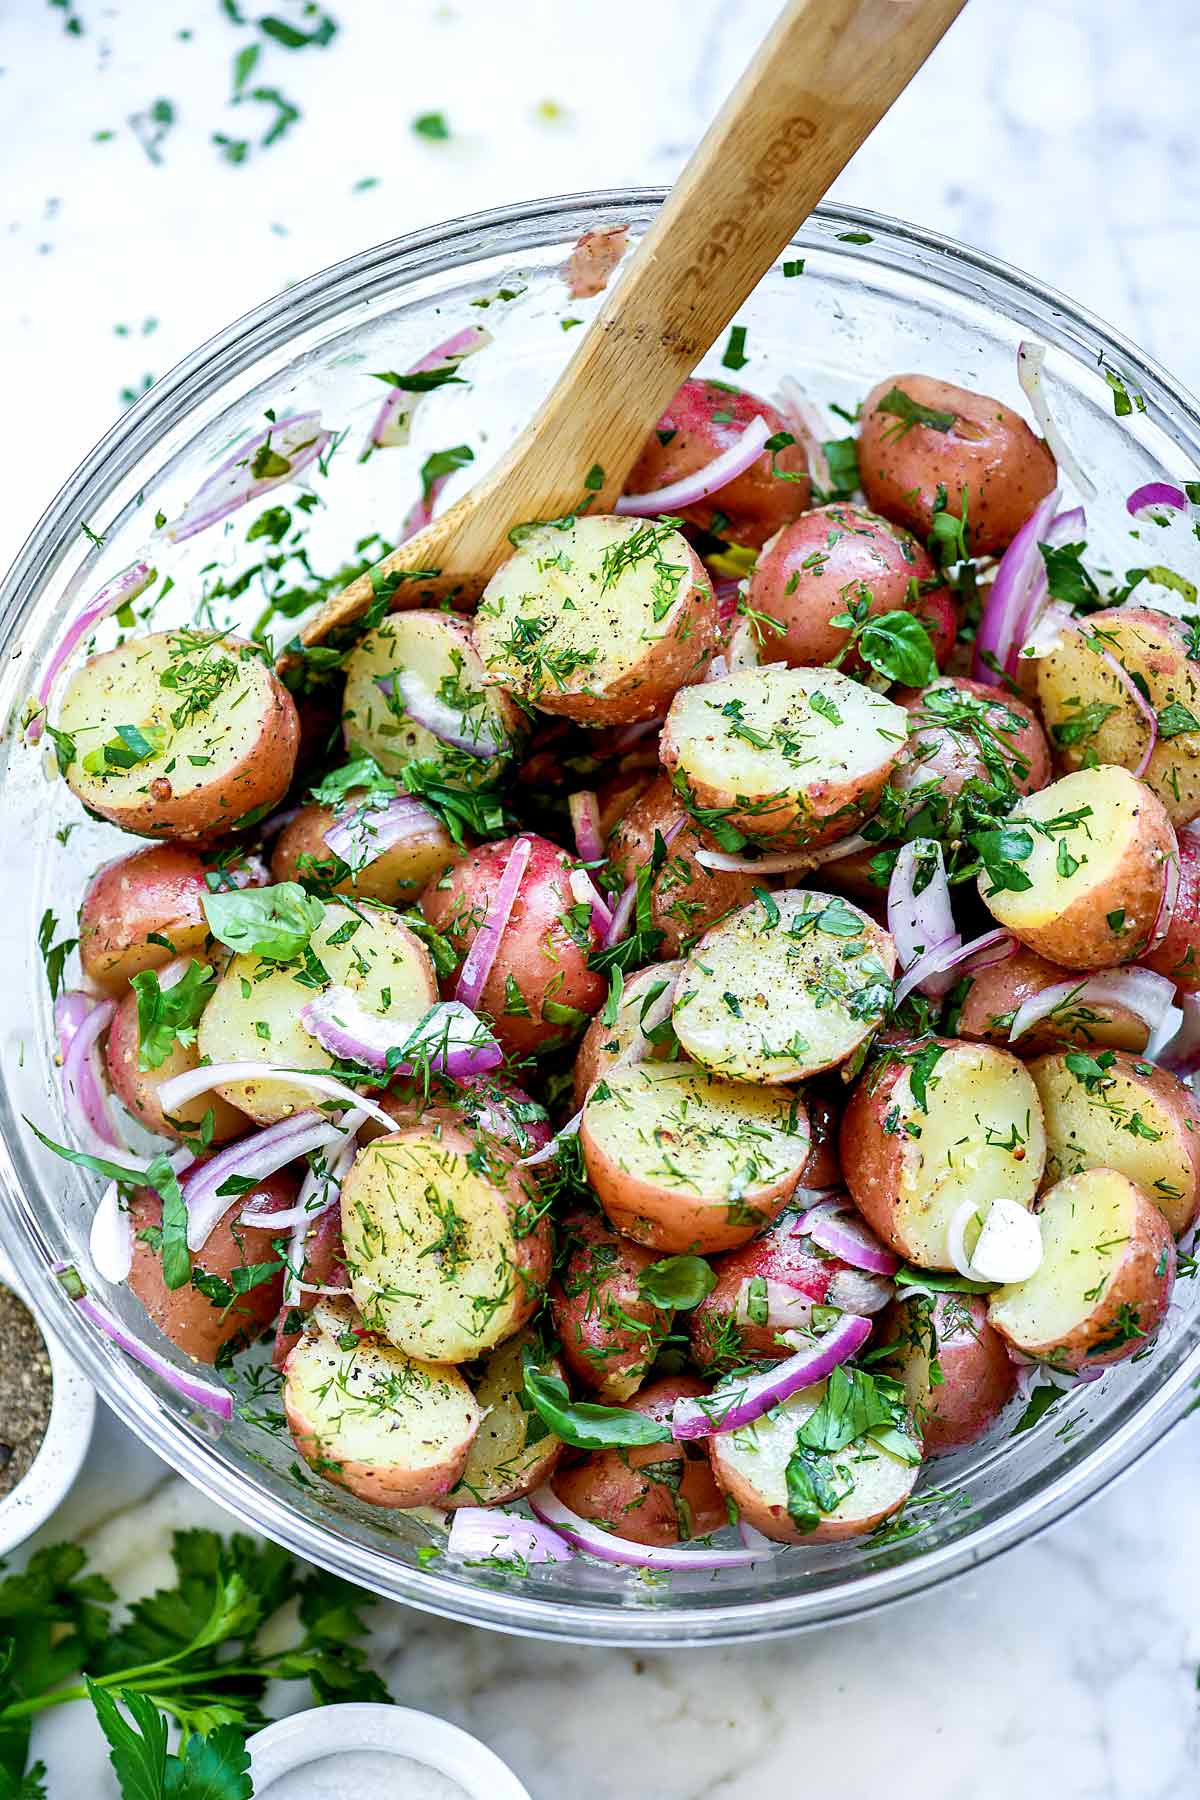 https://www.foodiecrush.com/wp-content/uploads/2019/06/No-Mayo-Potato-Salad-foodiecrush.com-013.jpg